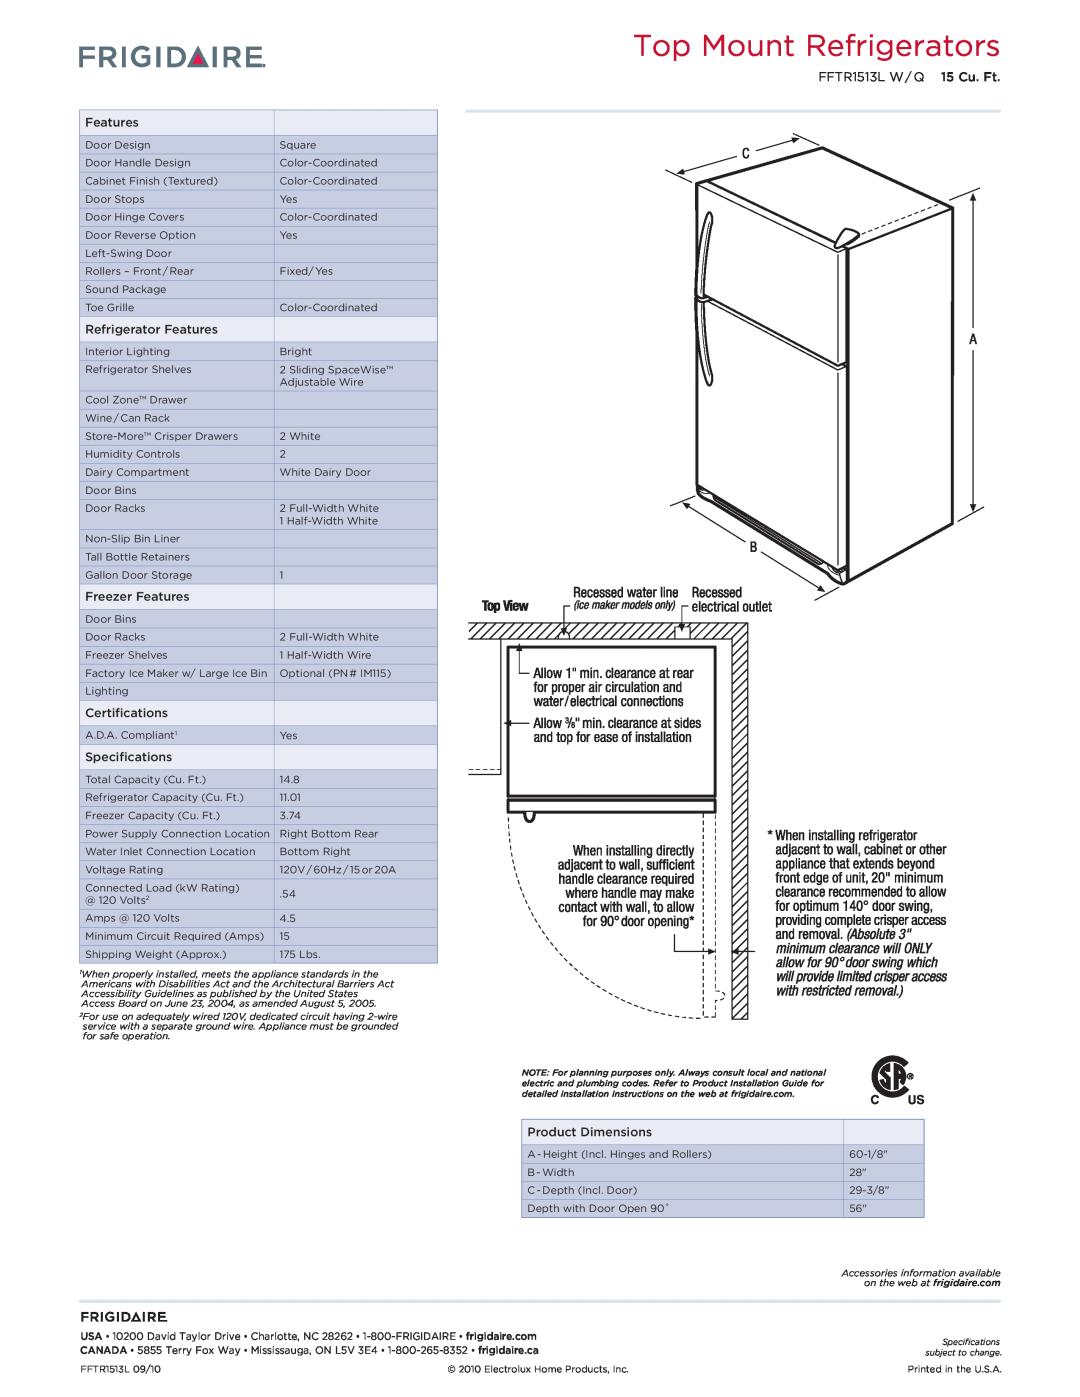 Frigidaire FFTR1513L W/Q Top Mount Refrigerators, FFTR1513L W / Q 15 Cu. Ft, Refrigerator Features, Freezer Features 